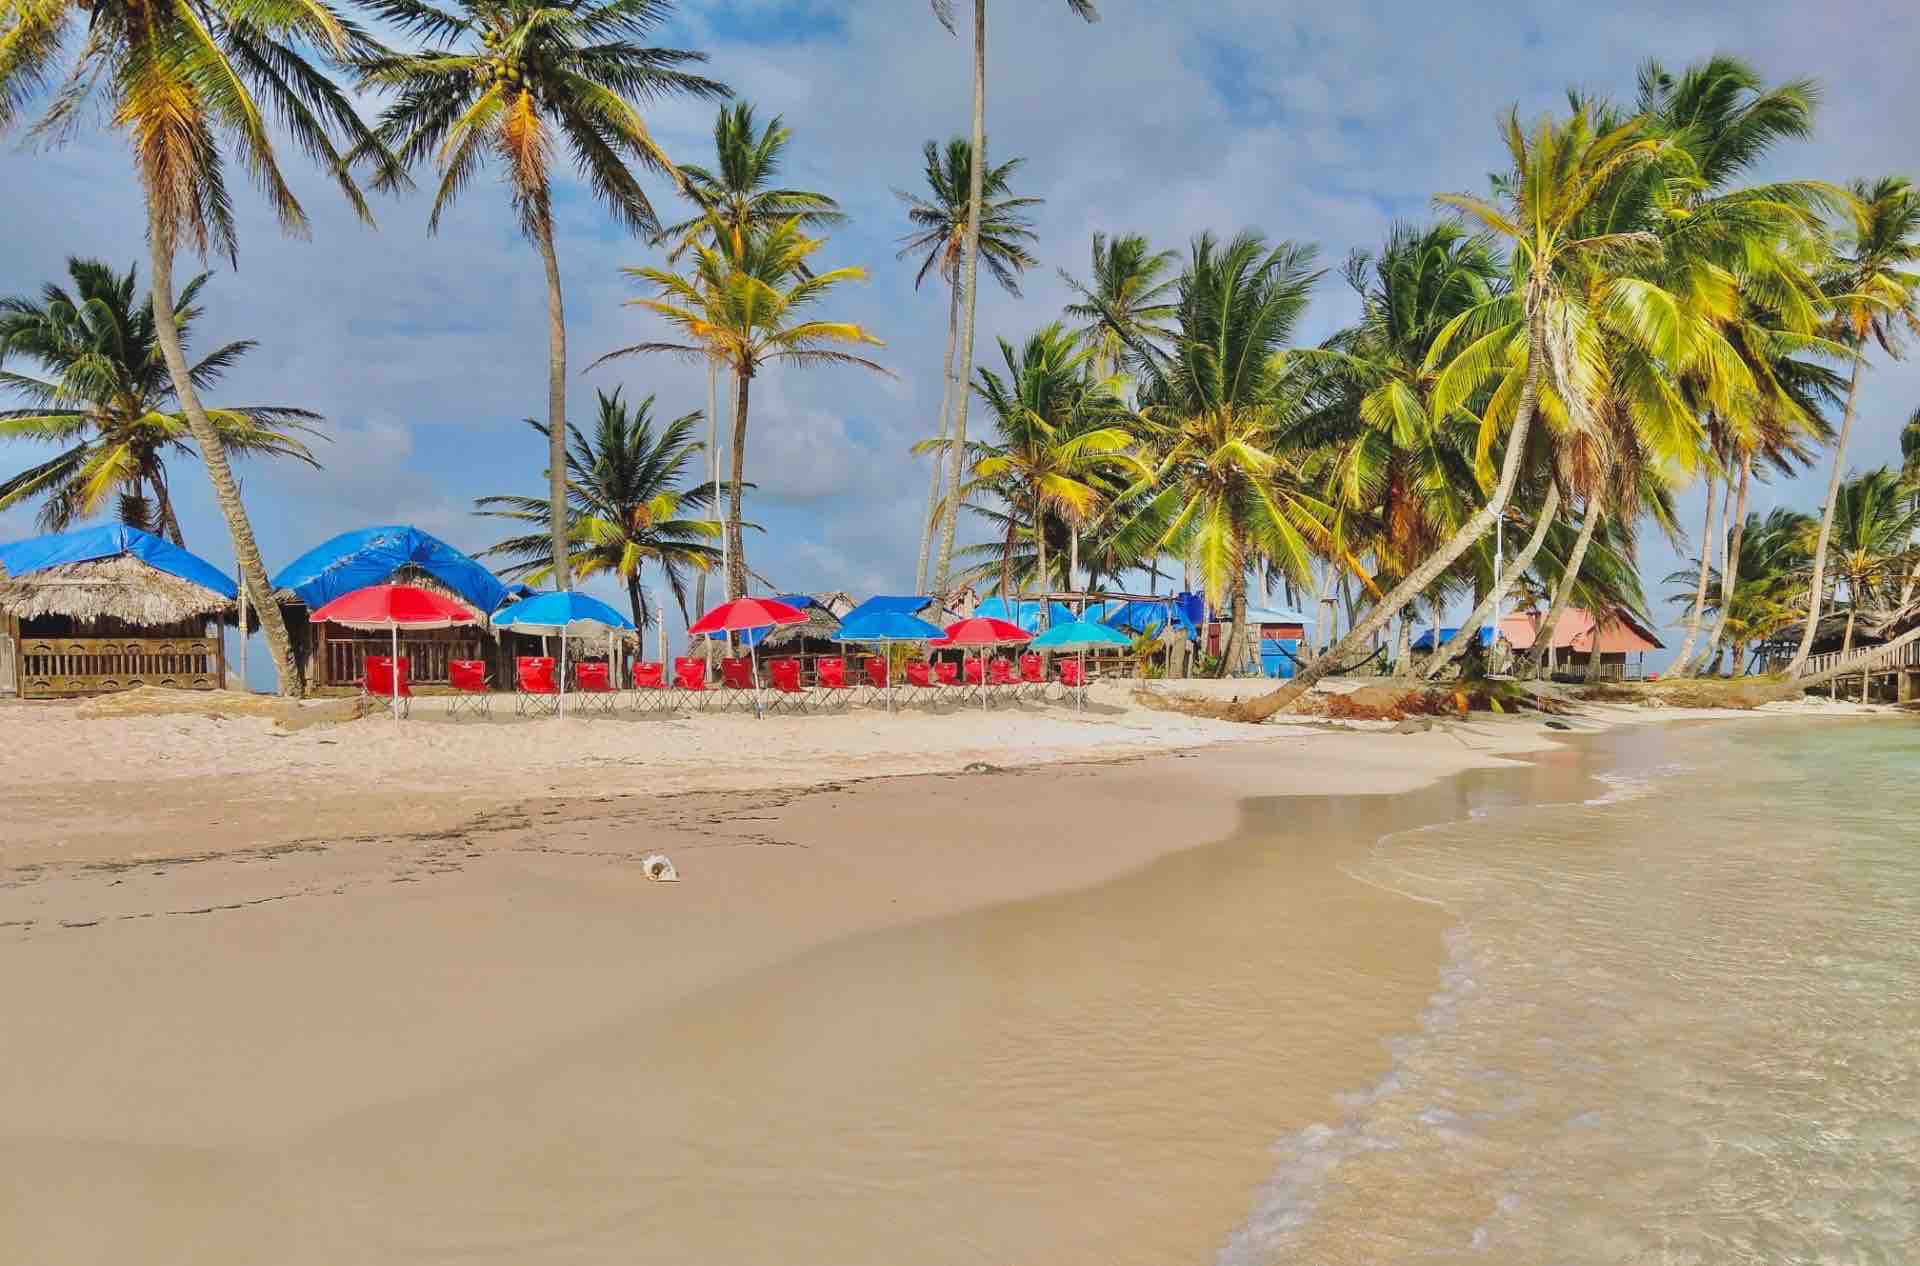 San Blas Isla Guanidup island palm trees red beach chairs